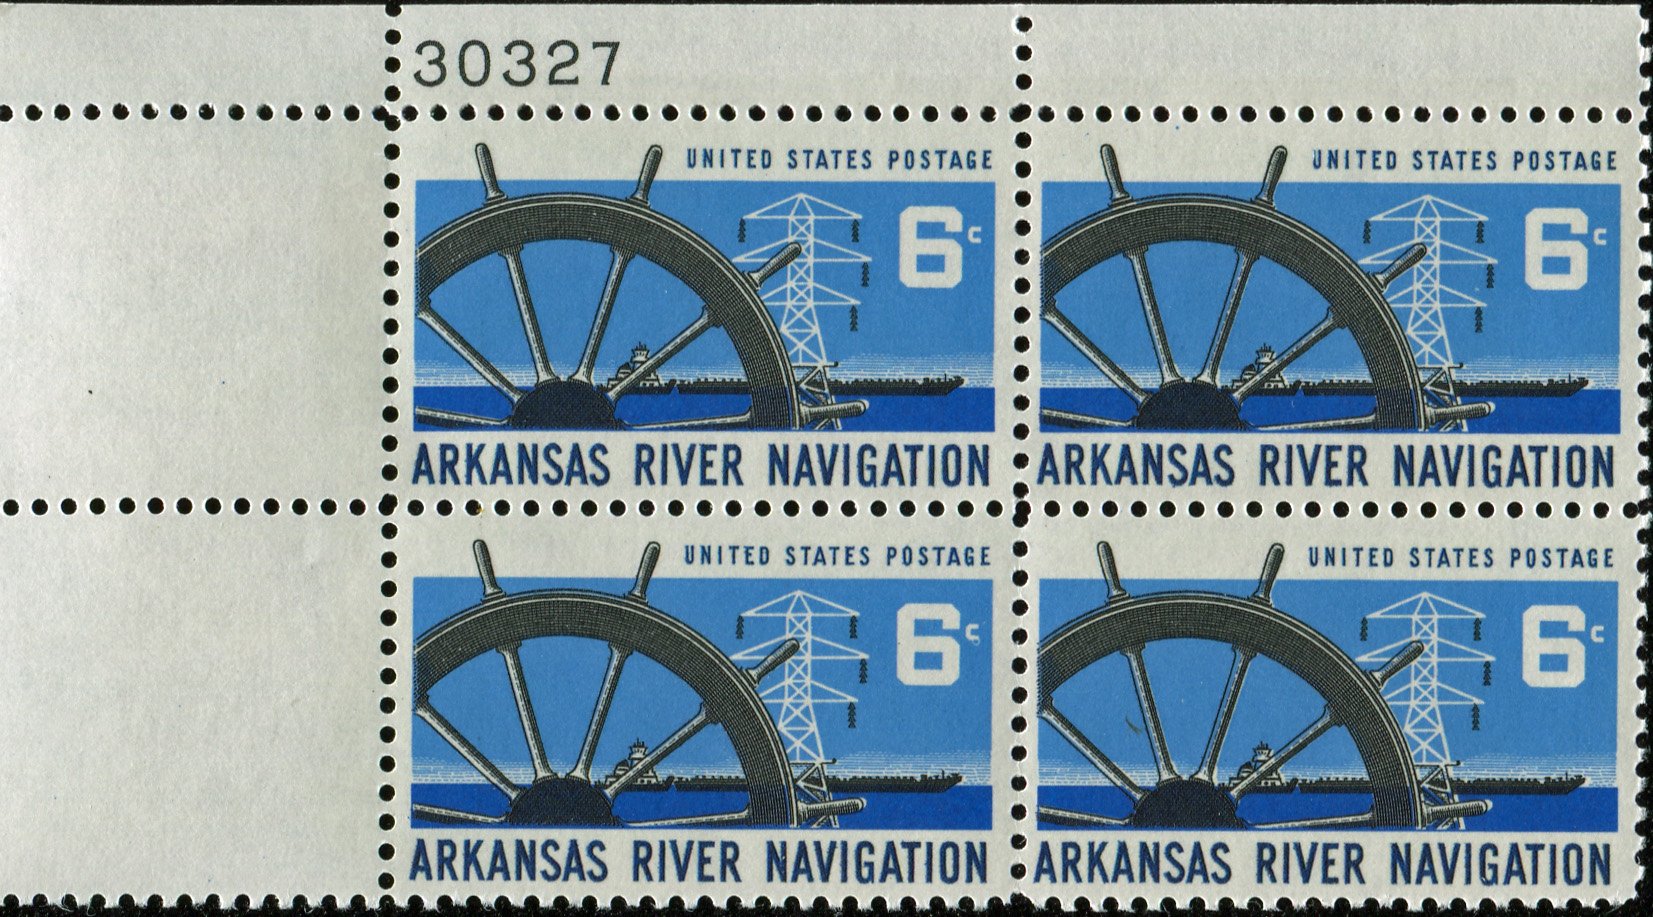 No. 1358 Arkansas River 6 cent U. S. Posatage Stamp Plate Block (4 stamps)